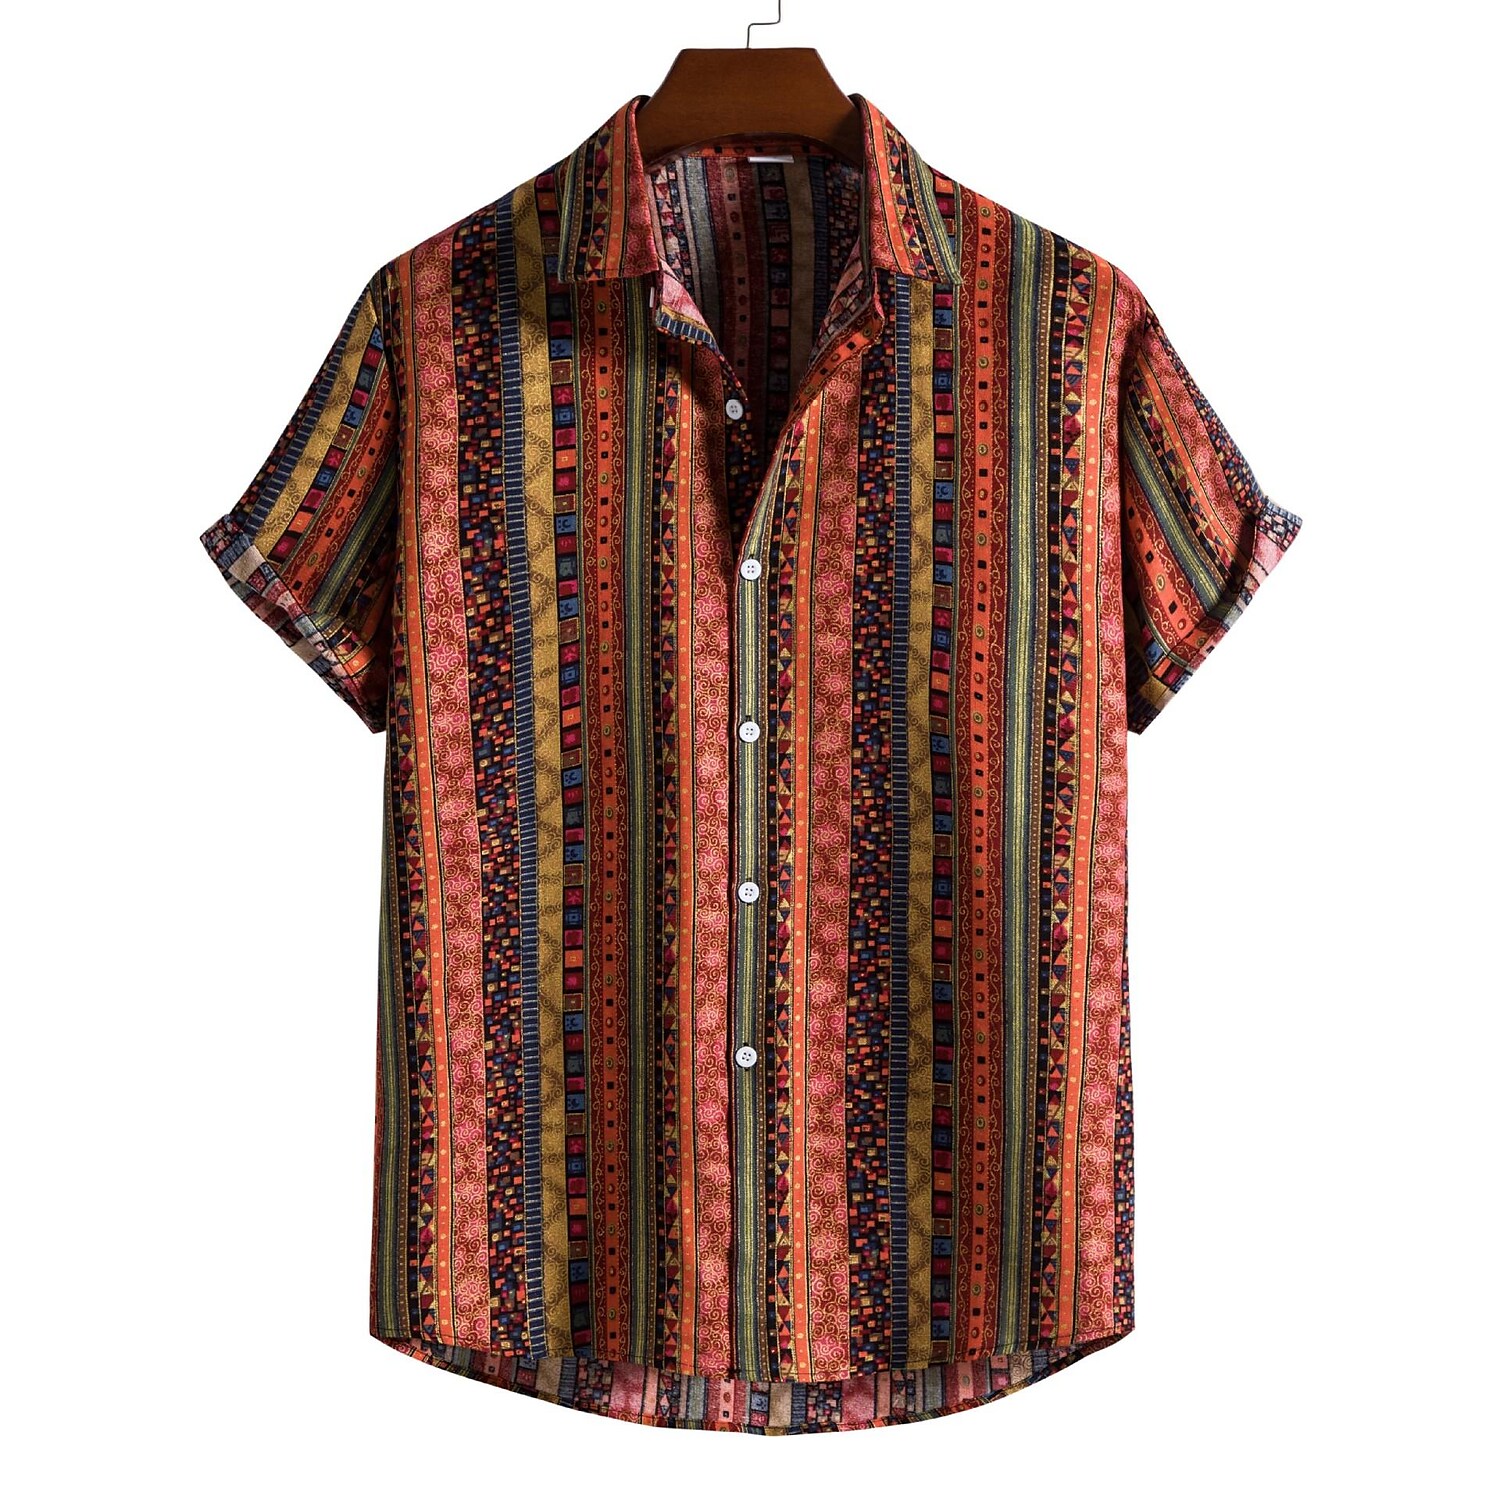 Men's Cotton Linen Vintage Ethnic Print Short Sleeve Shirt